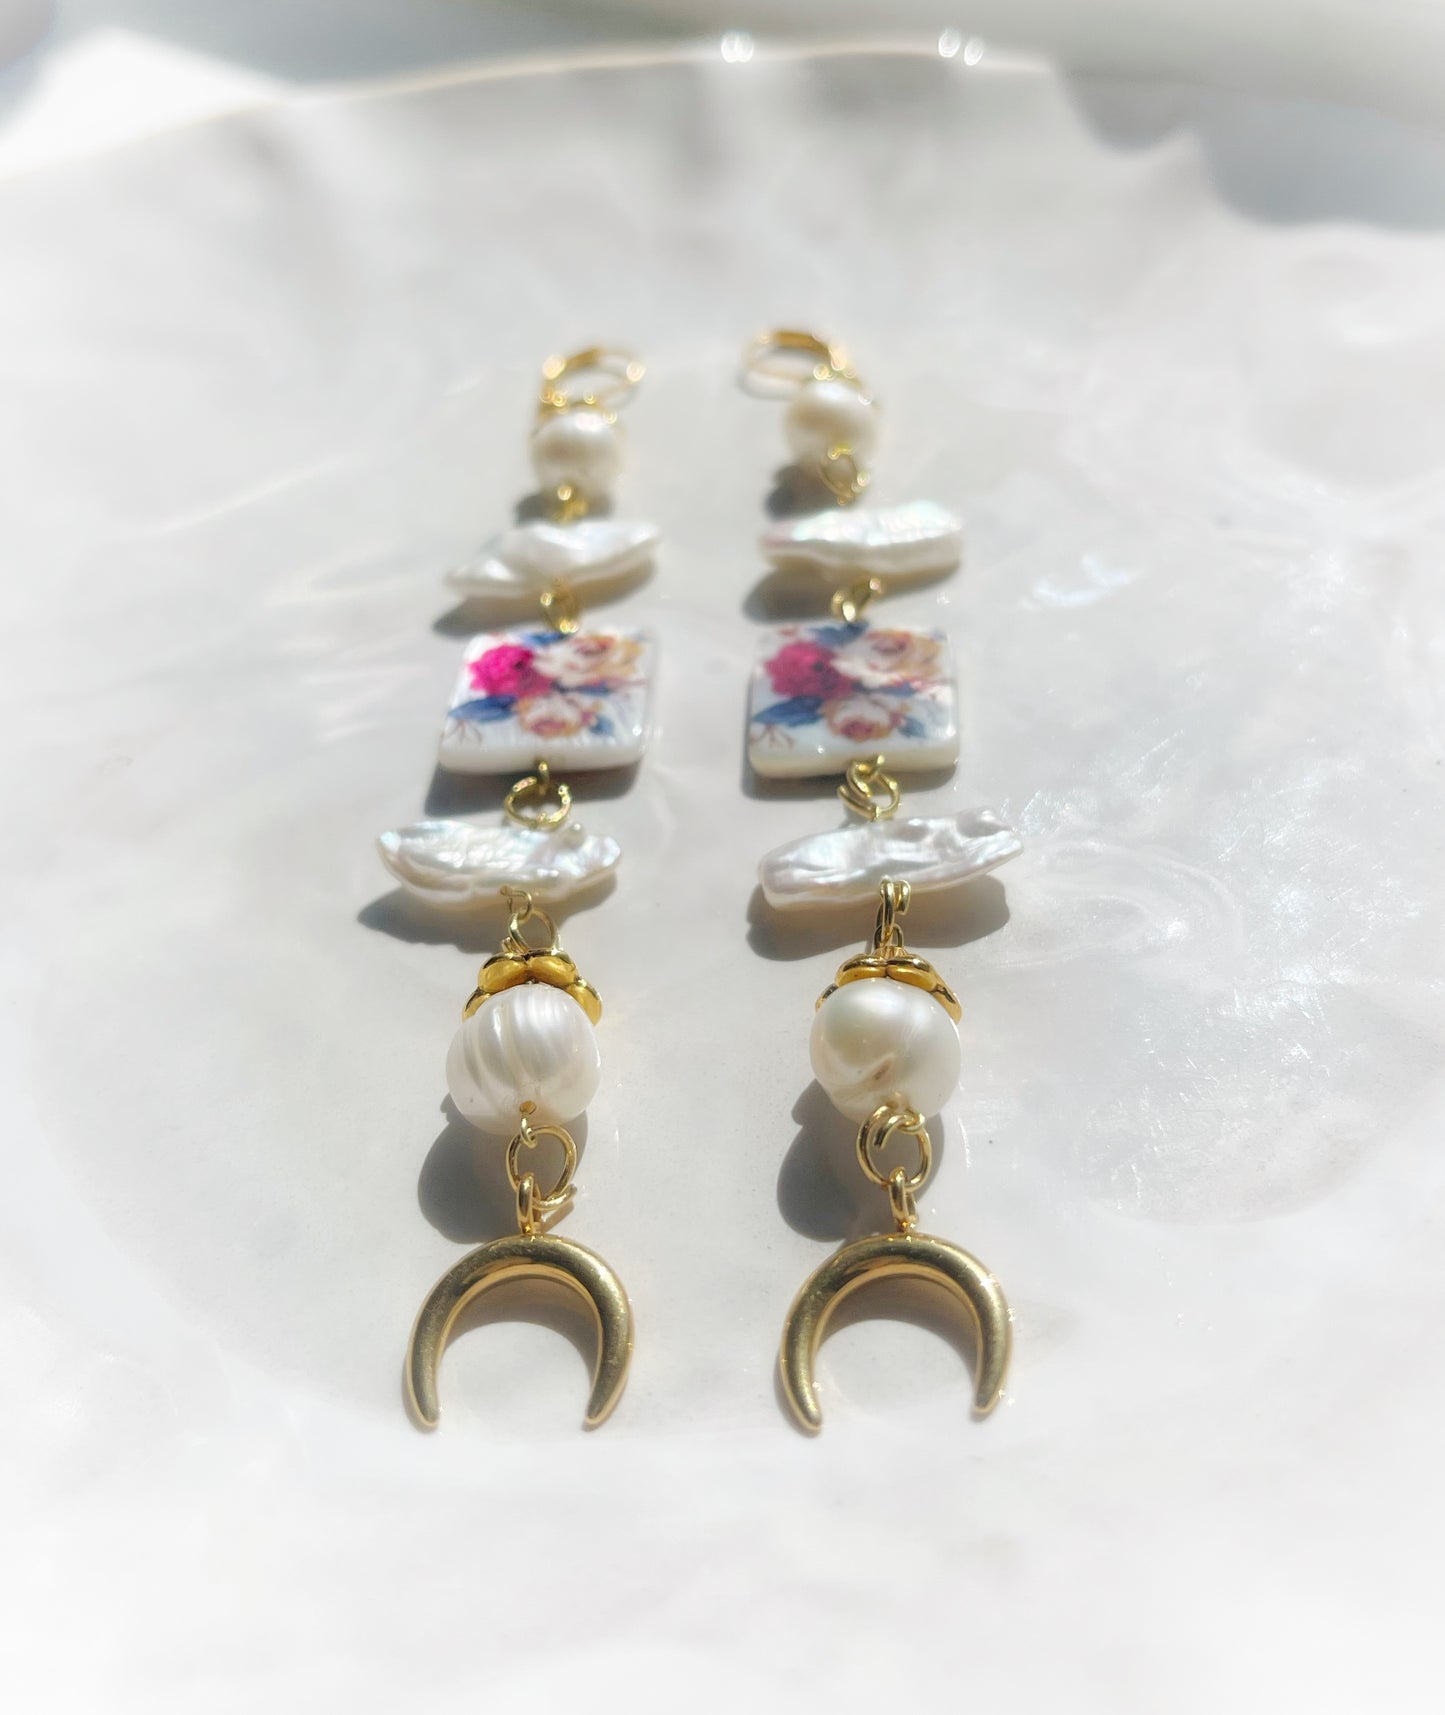 Floral pearl drop earrings with moon charm, white freshwater pearl dangle earrings, statement earrings, summer earrings